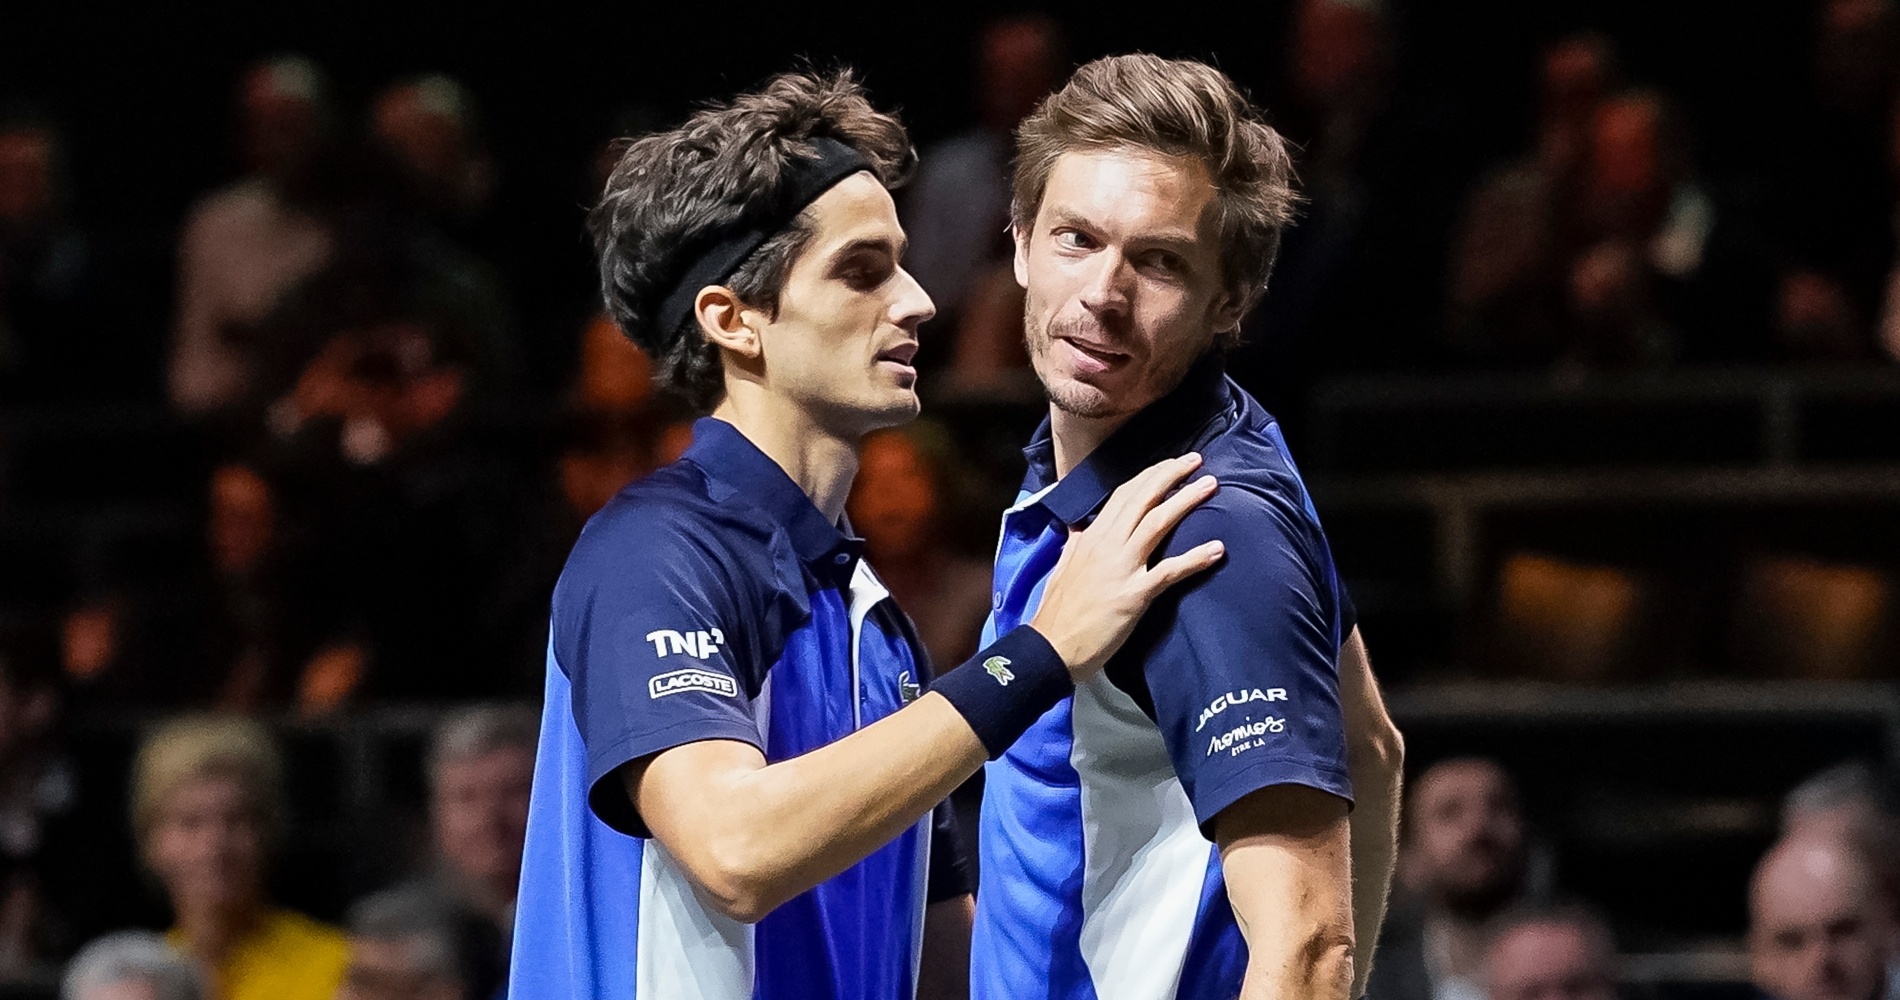 Pierre-Hugues Herbert and Nicolas Mahut, 2020 Rotterdam doubles' tournament